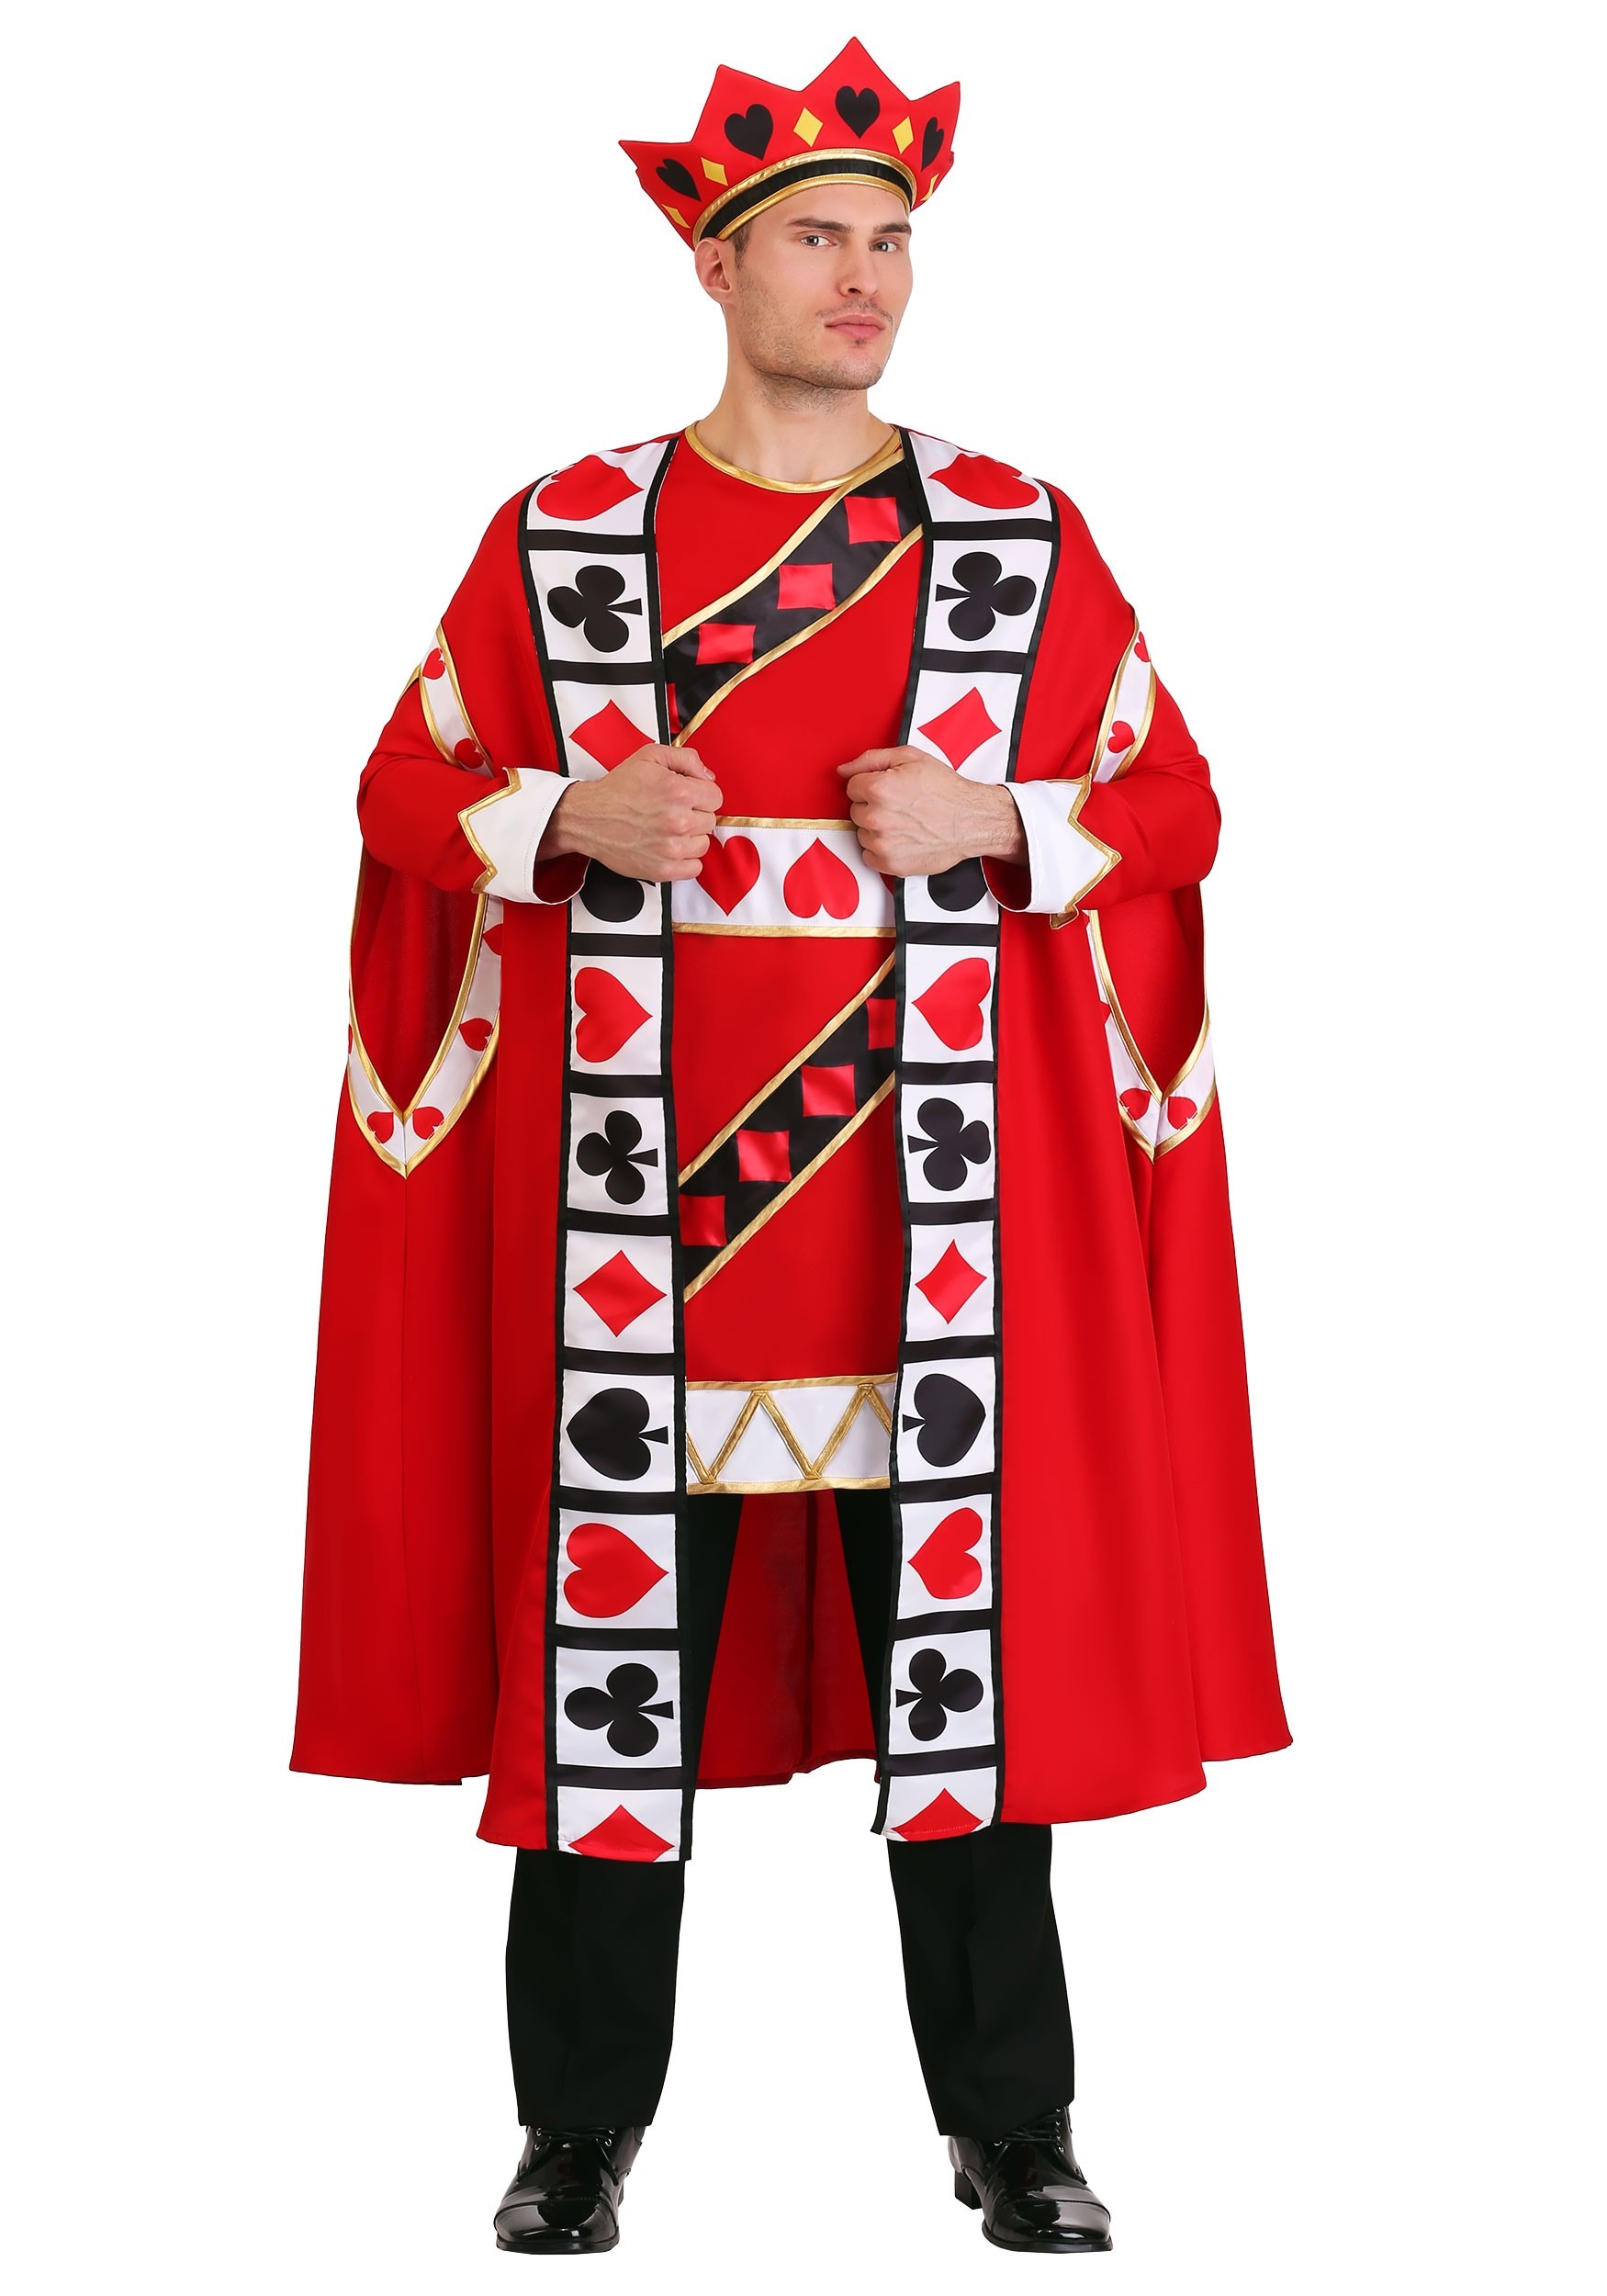 Photos - Fancy Dress Flama FUN Costumes King of Hearts Men's Costume Black/Red/White FUN7135A 